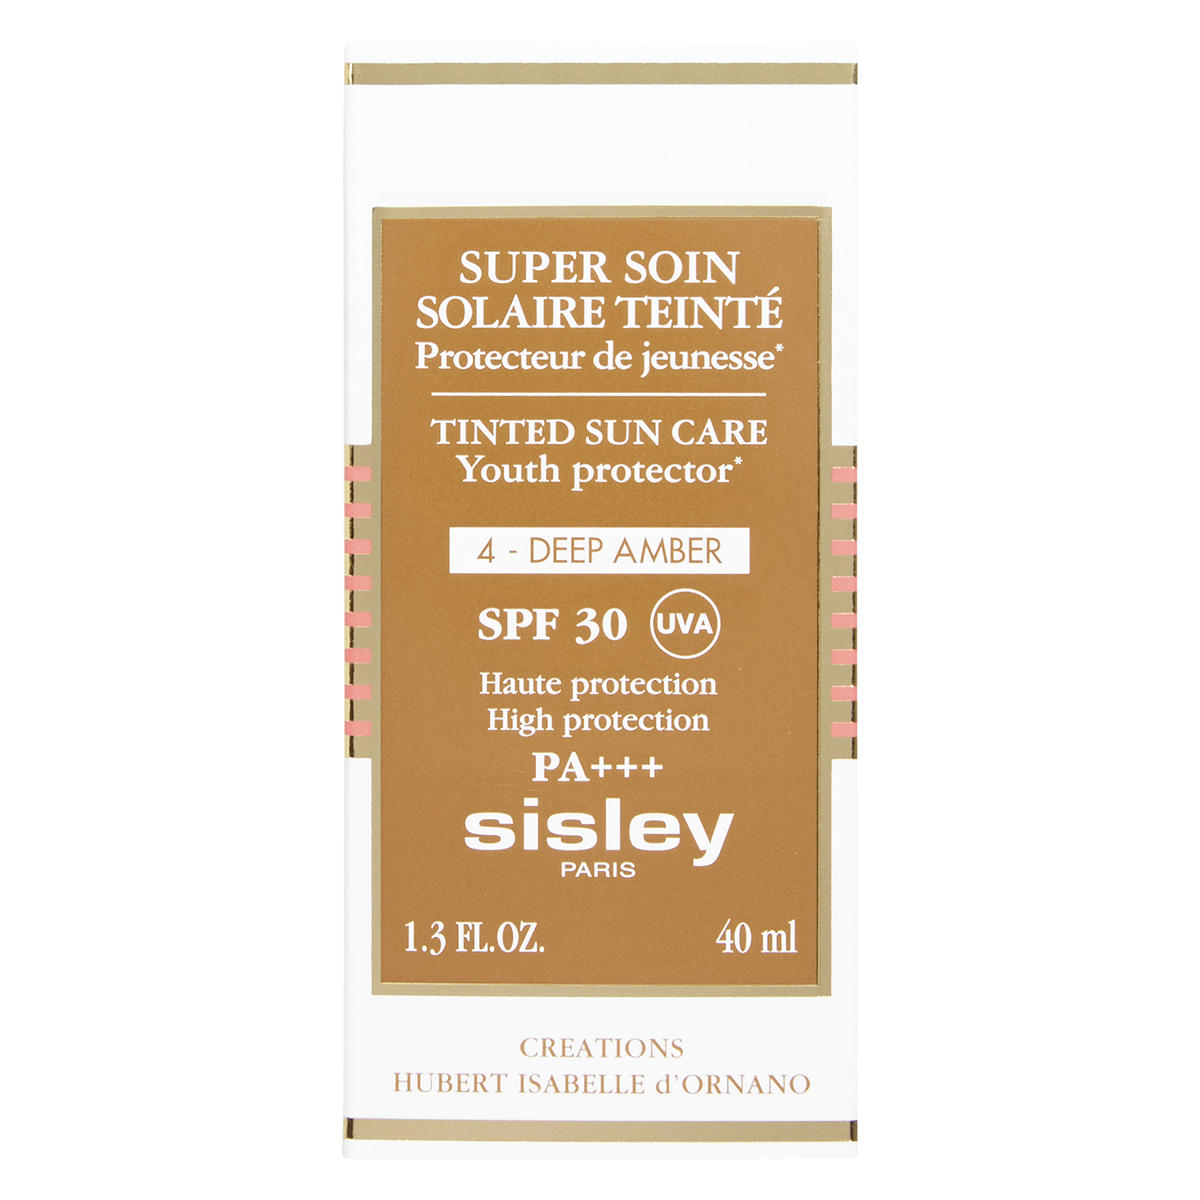 Sisley Paris Super Soin Solaire Teinté SPF 30 40 ml - 3